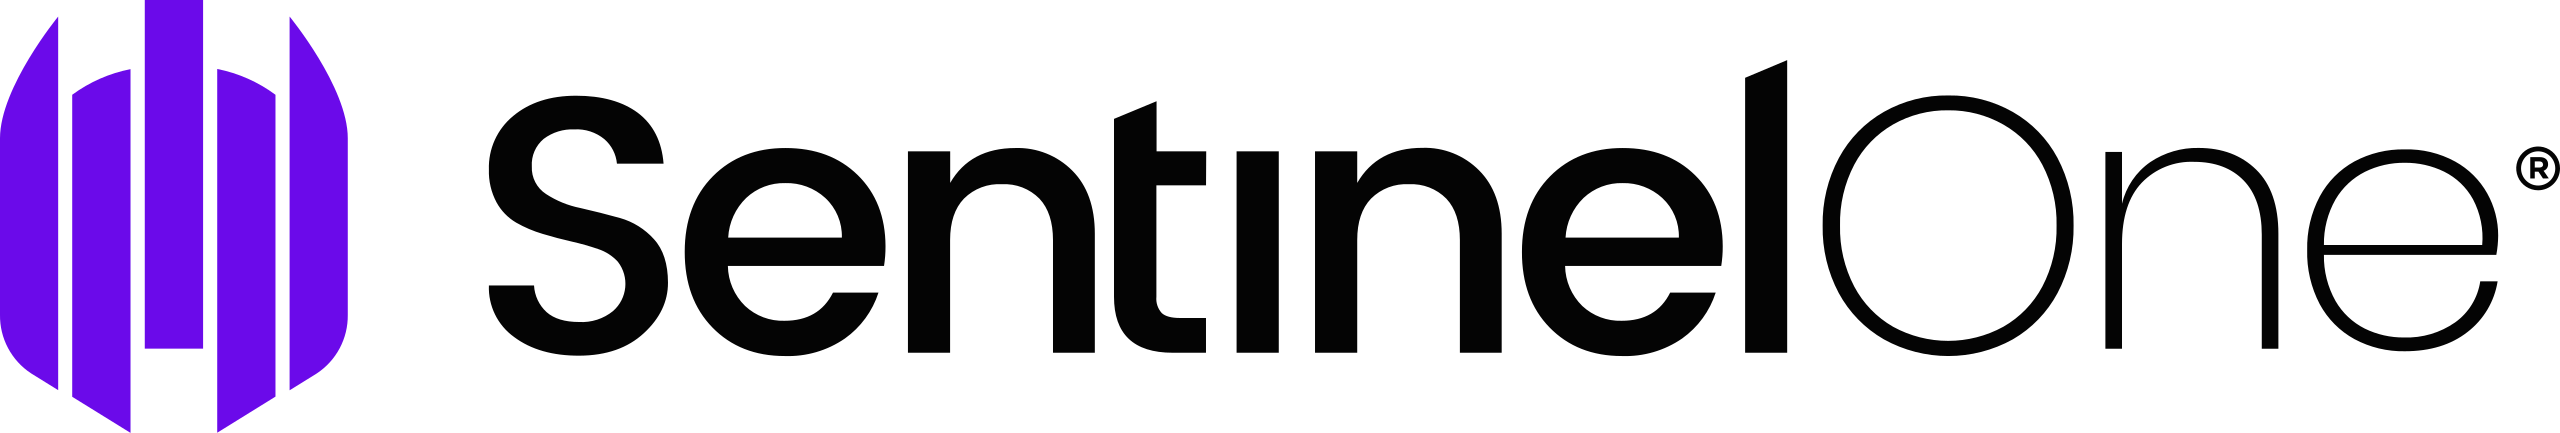 SentinelOne_logo.svg